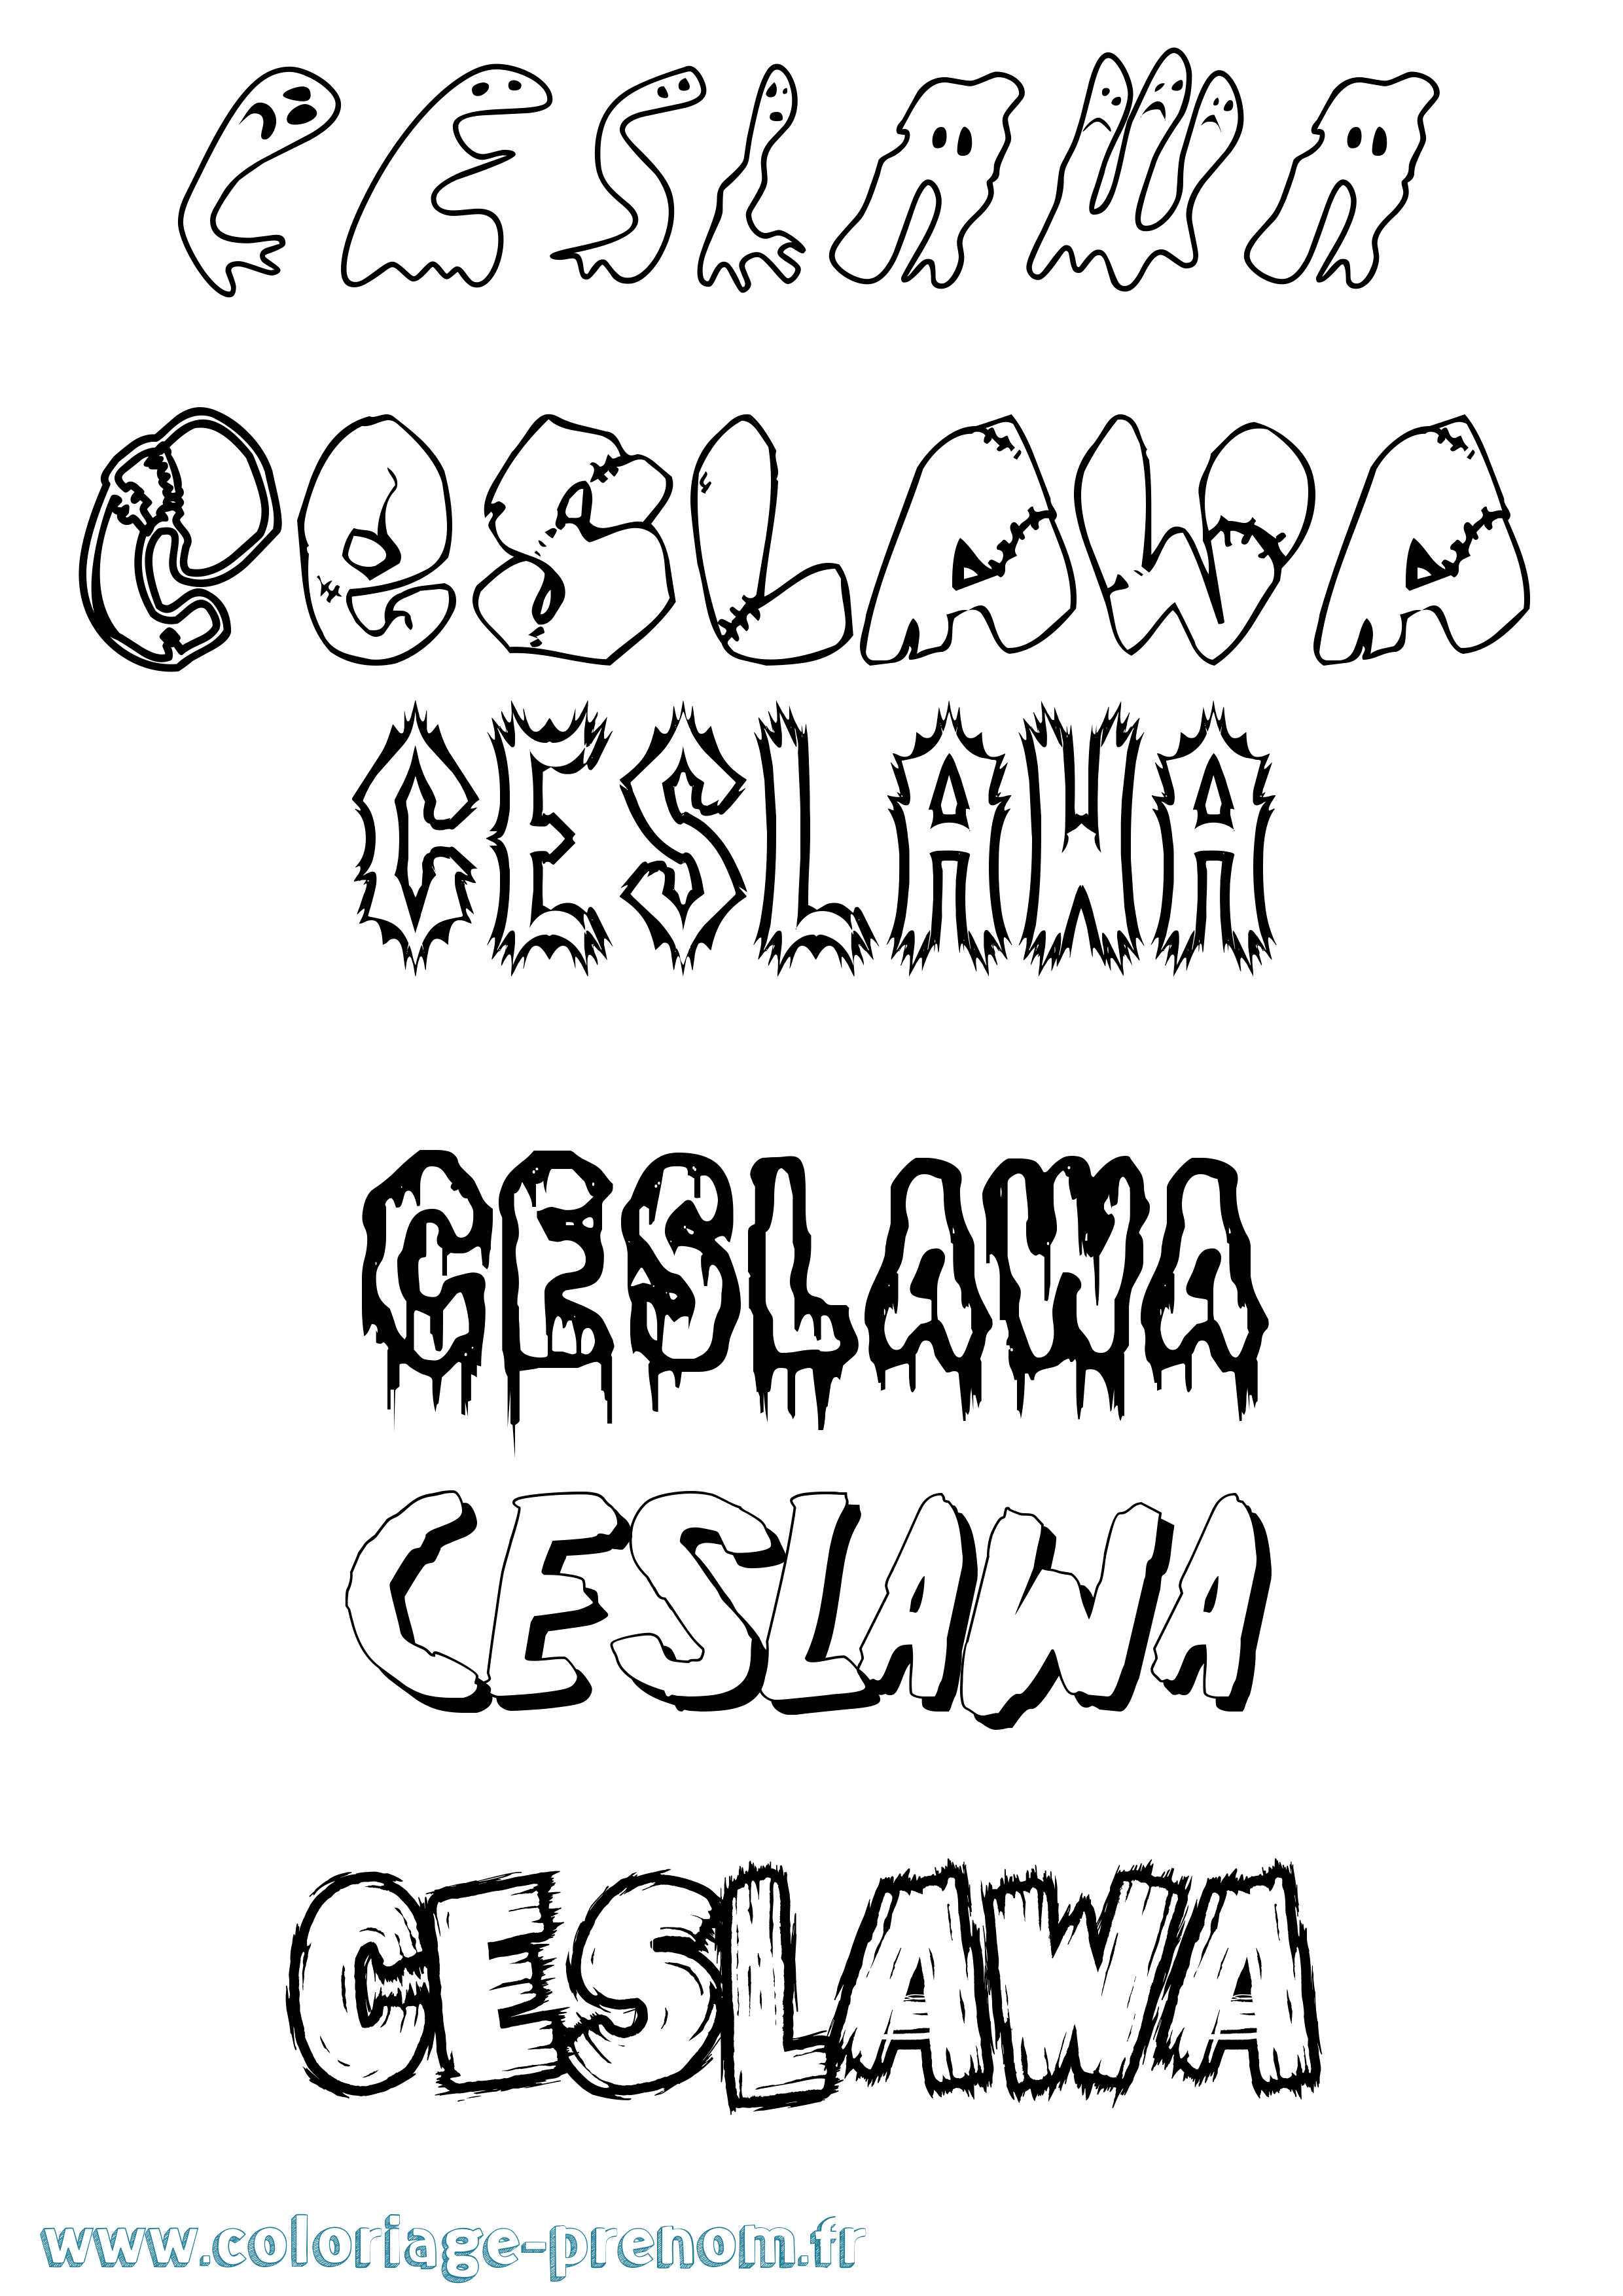 Coloriage prénom Ceslawa Frisson